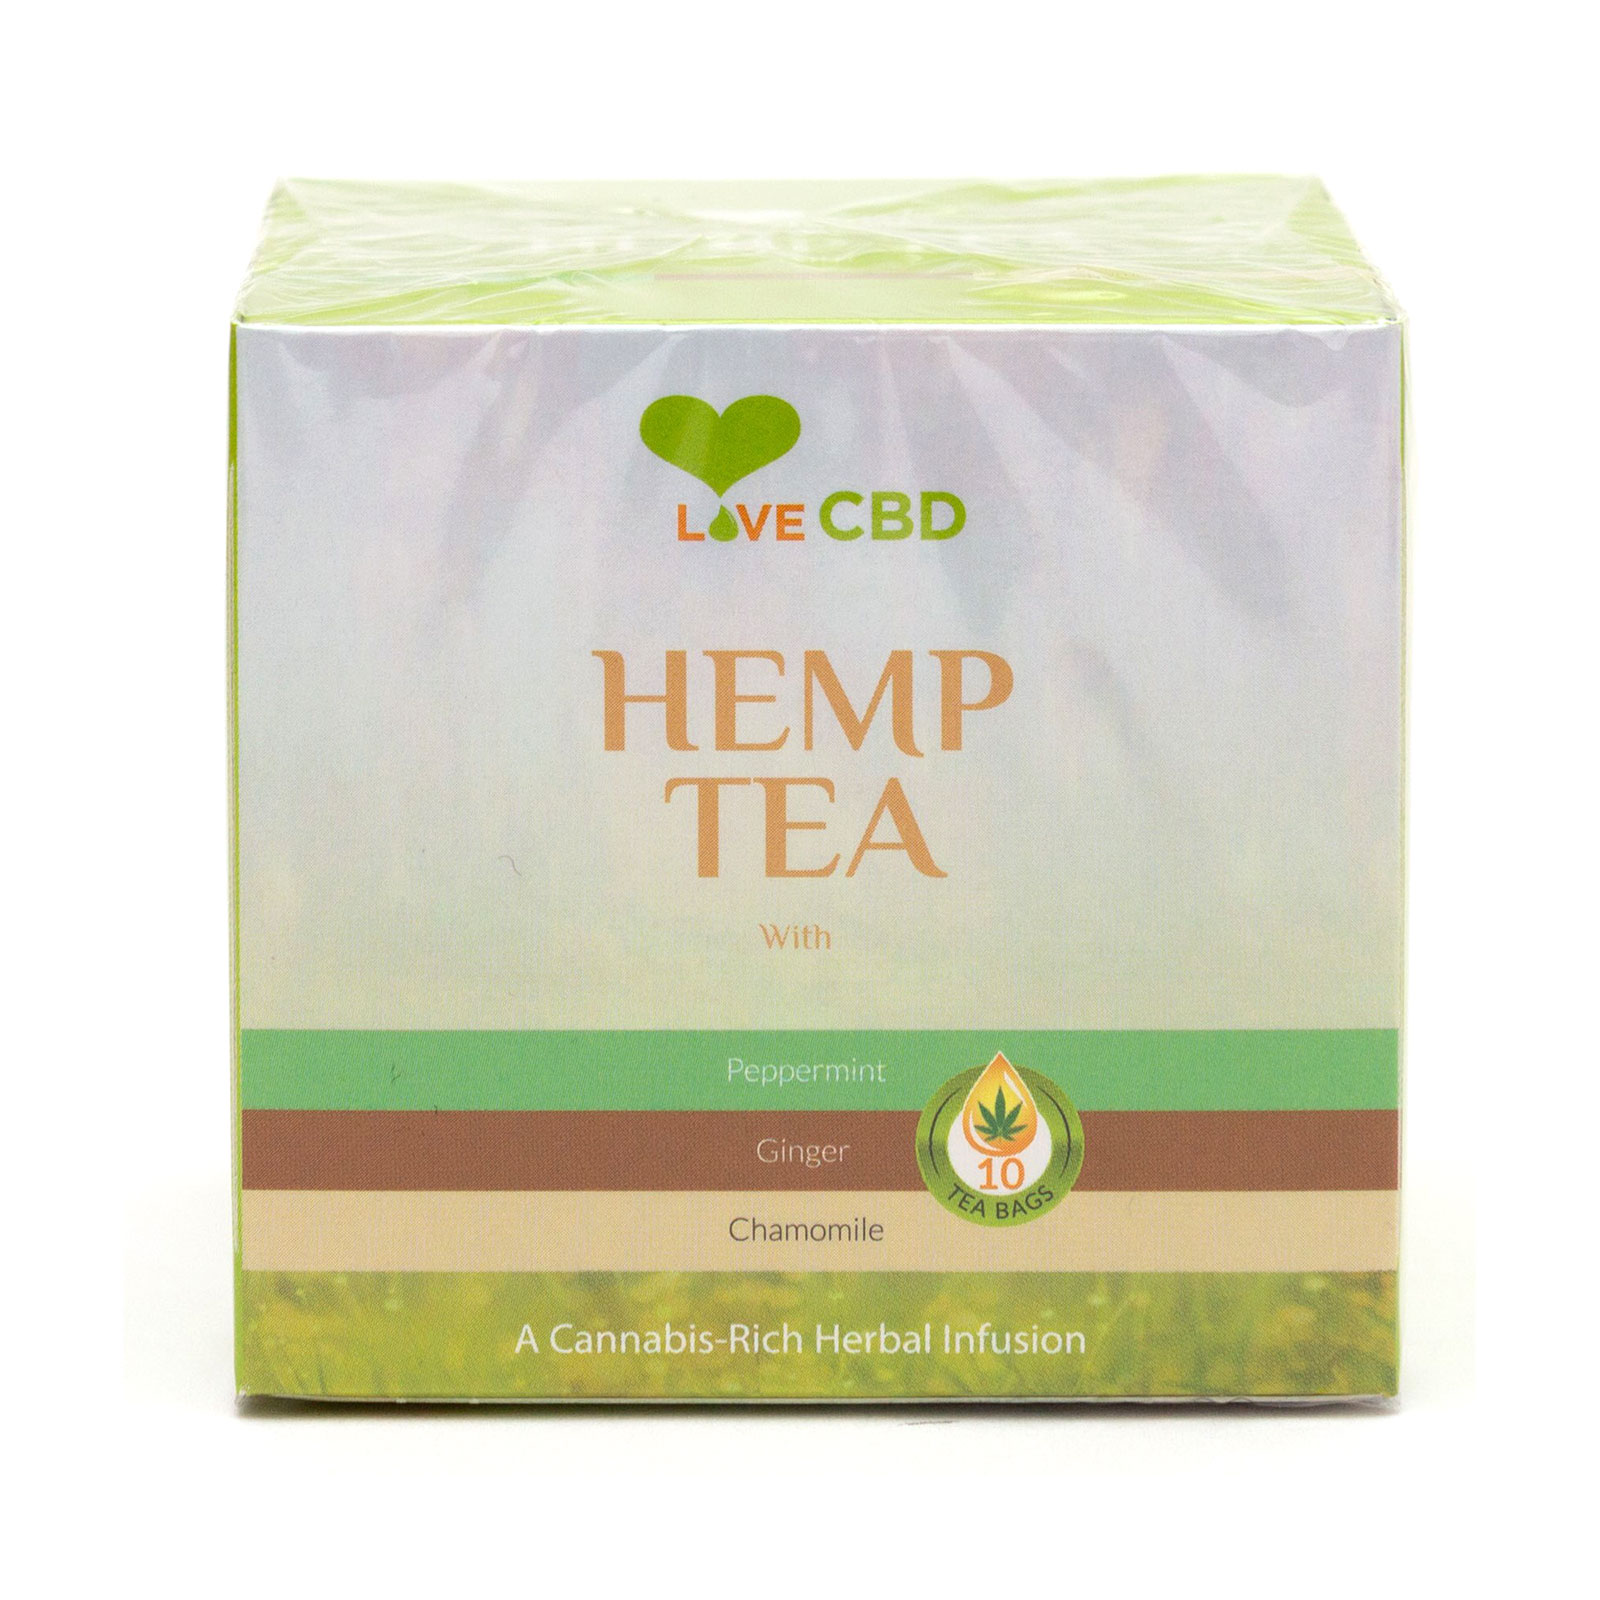 Love CBD Hemp Tea